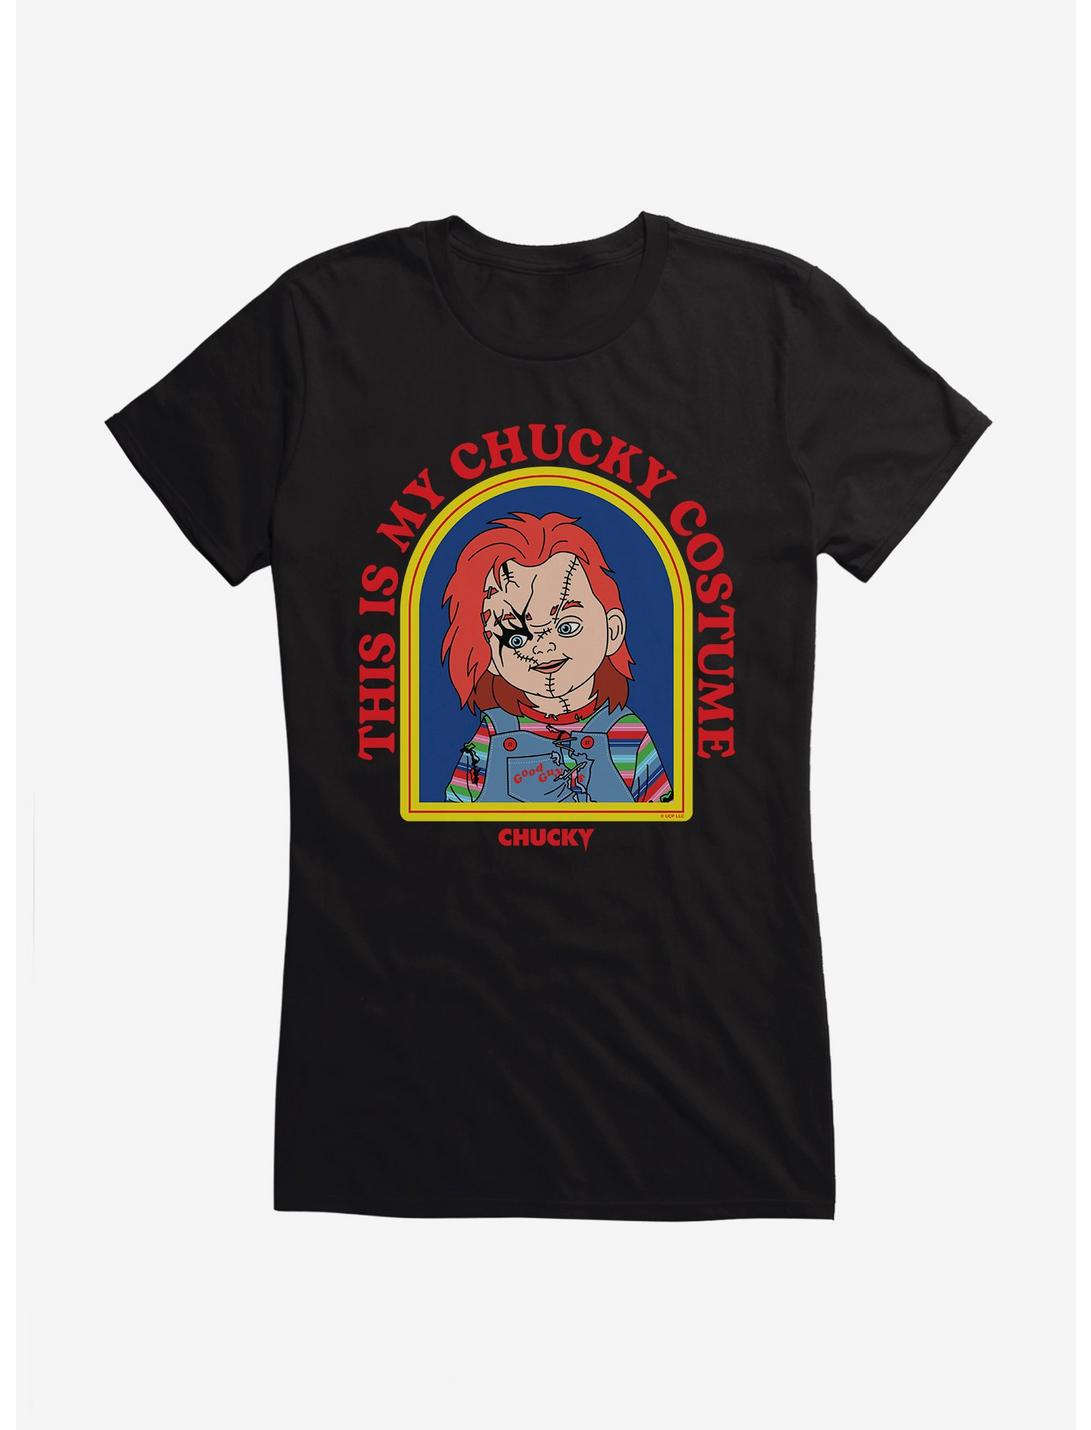 Chucky This Is My Chucky Costume Girls T-Shirt, BLACK, hi-res